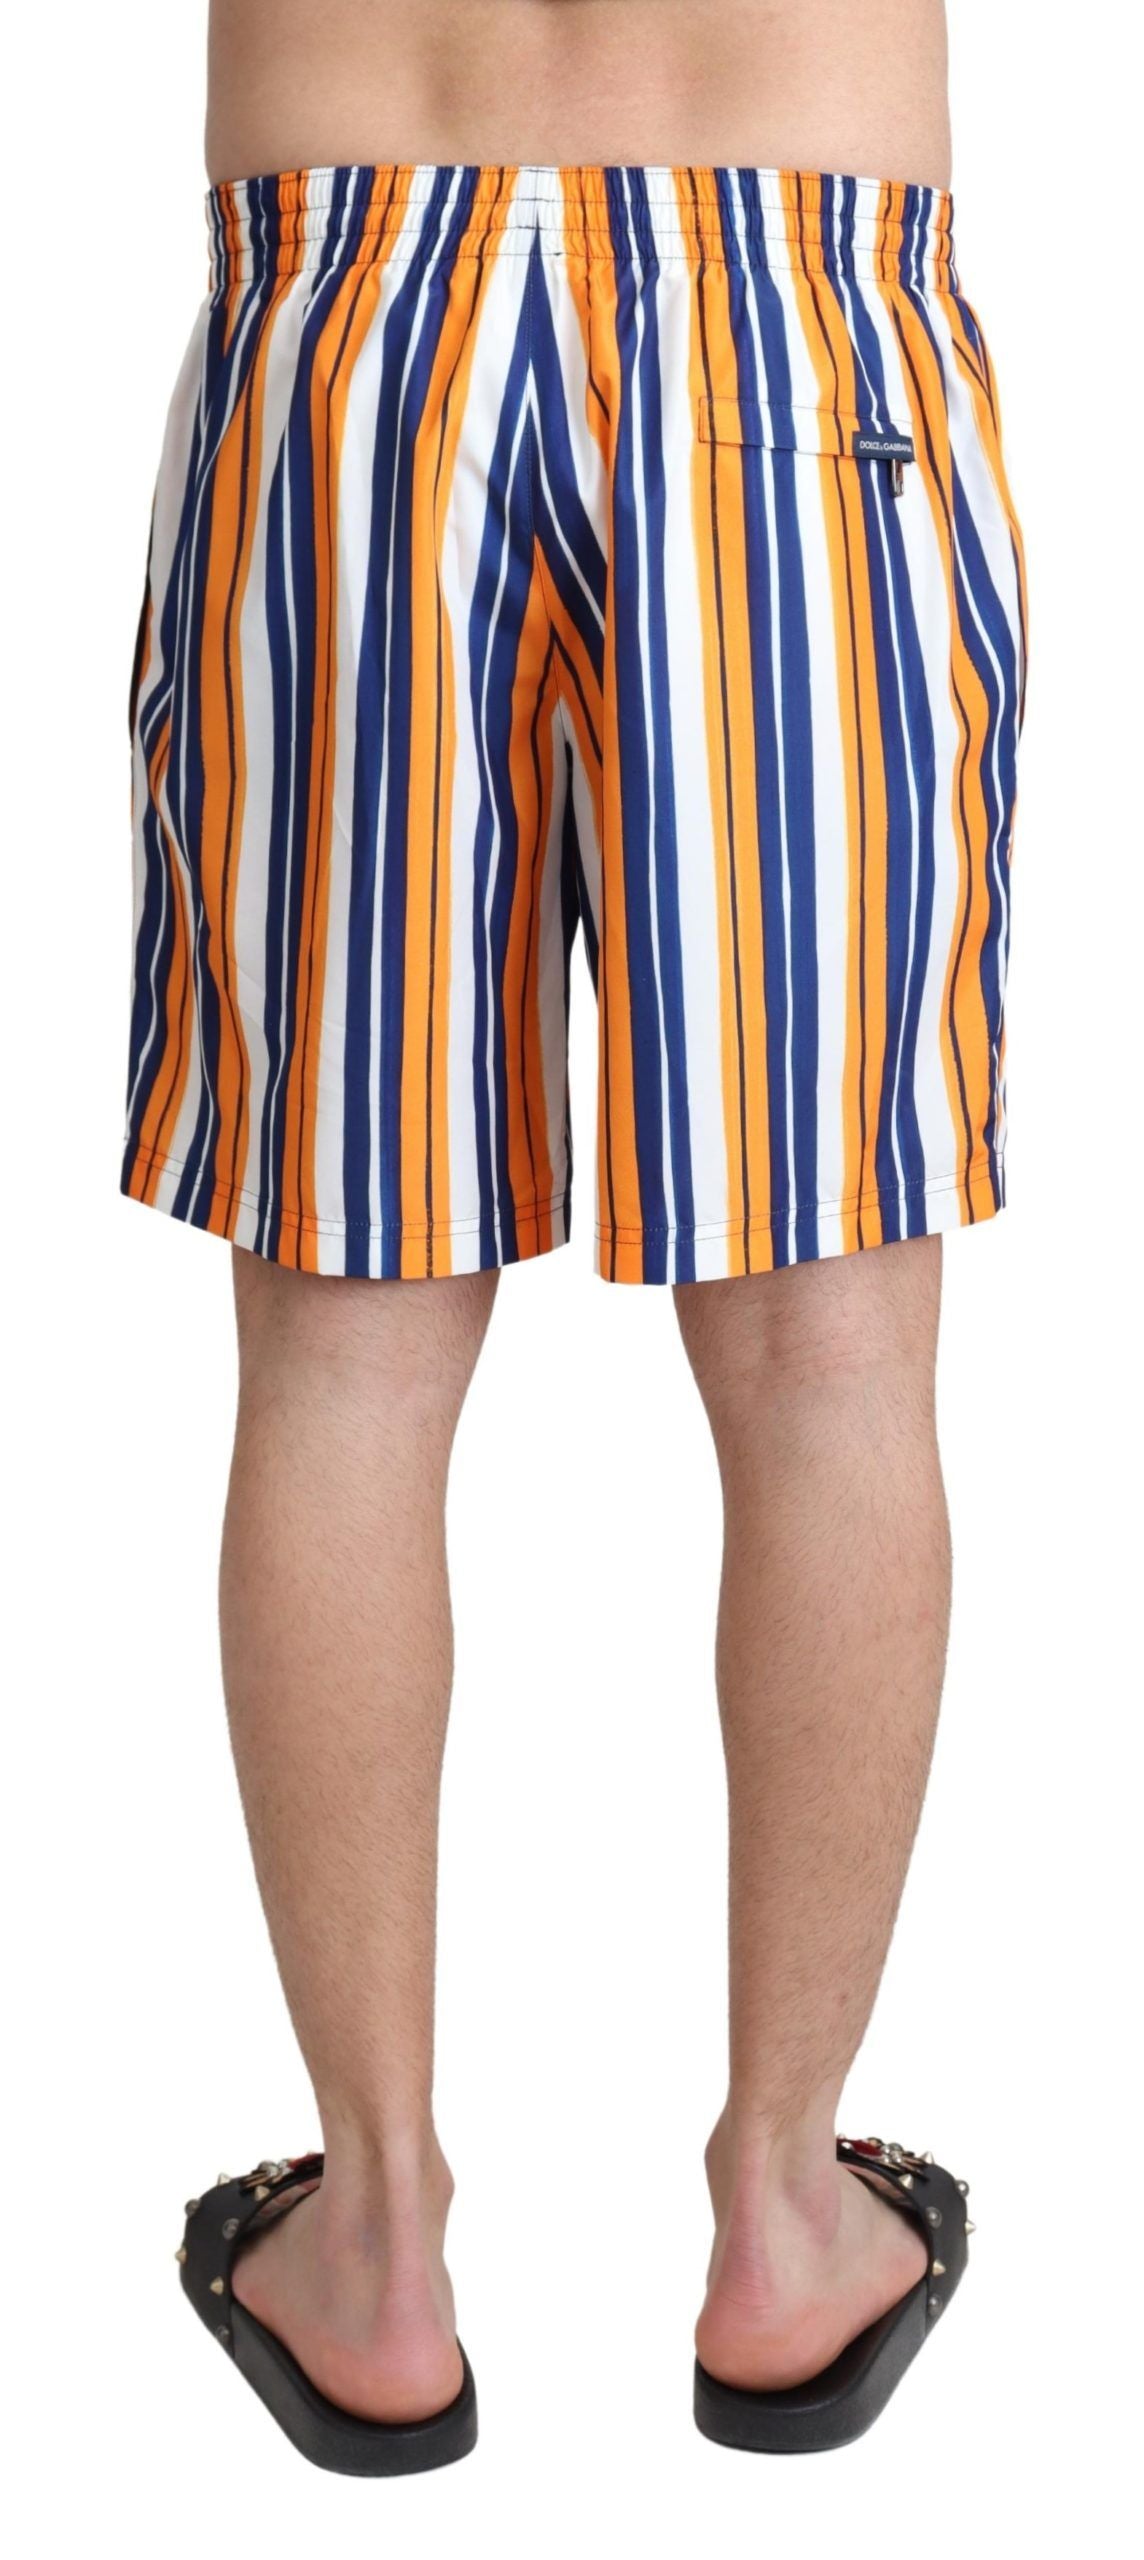 Multicolor Striped Swim Shorts Trunks